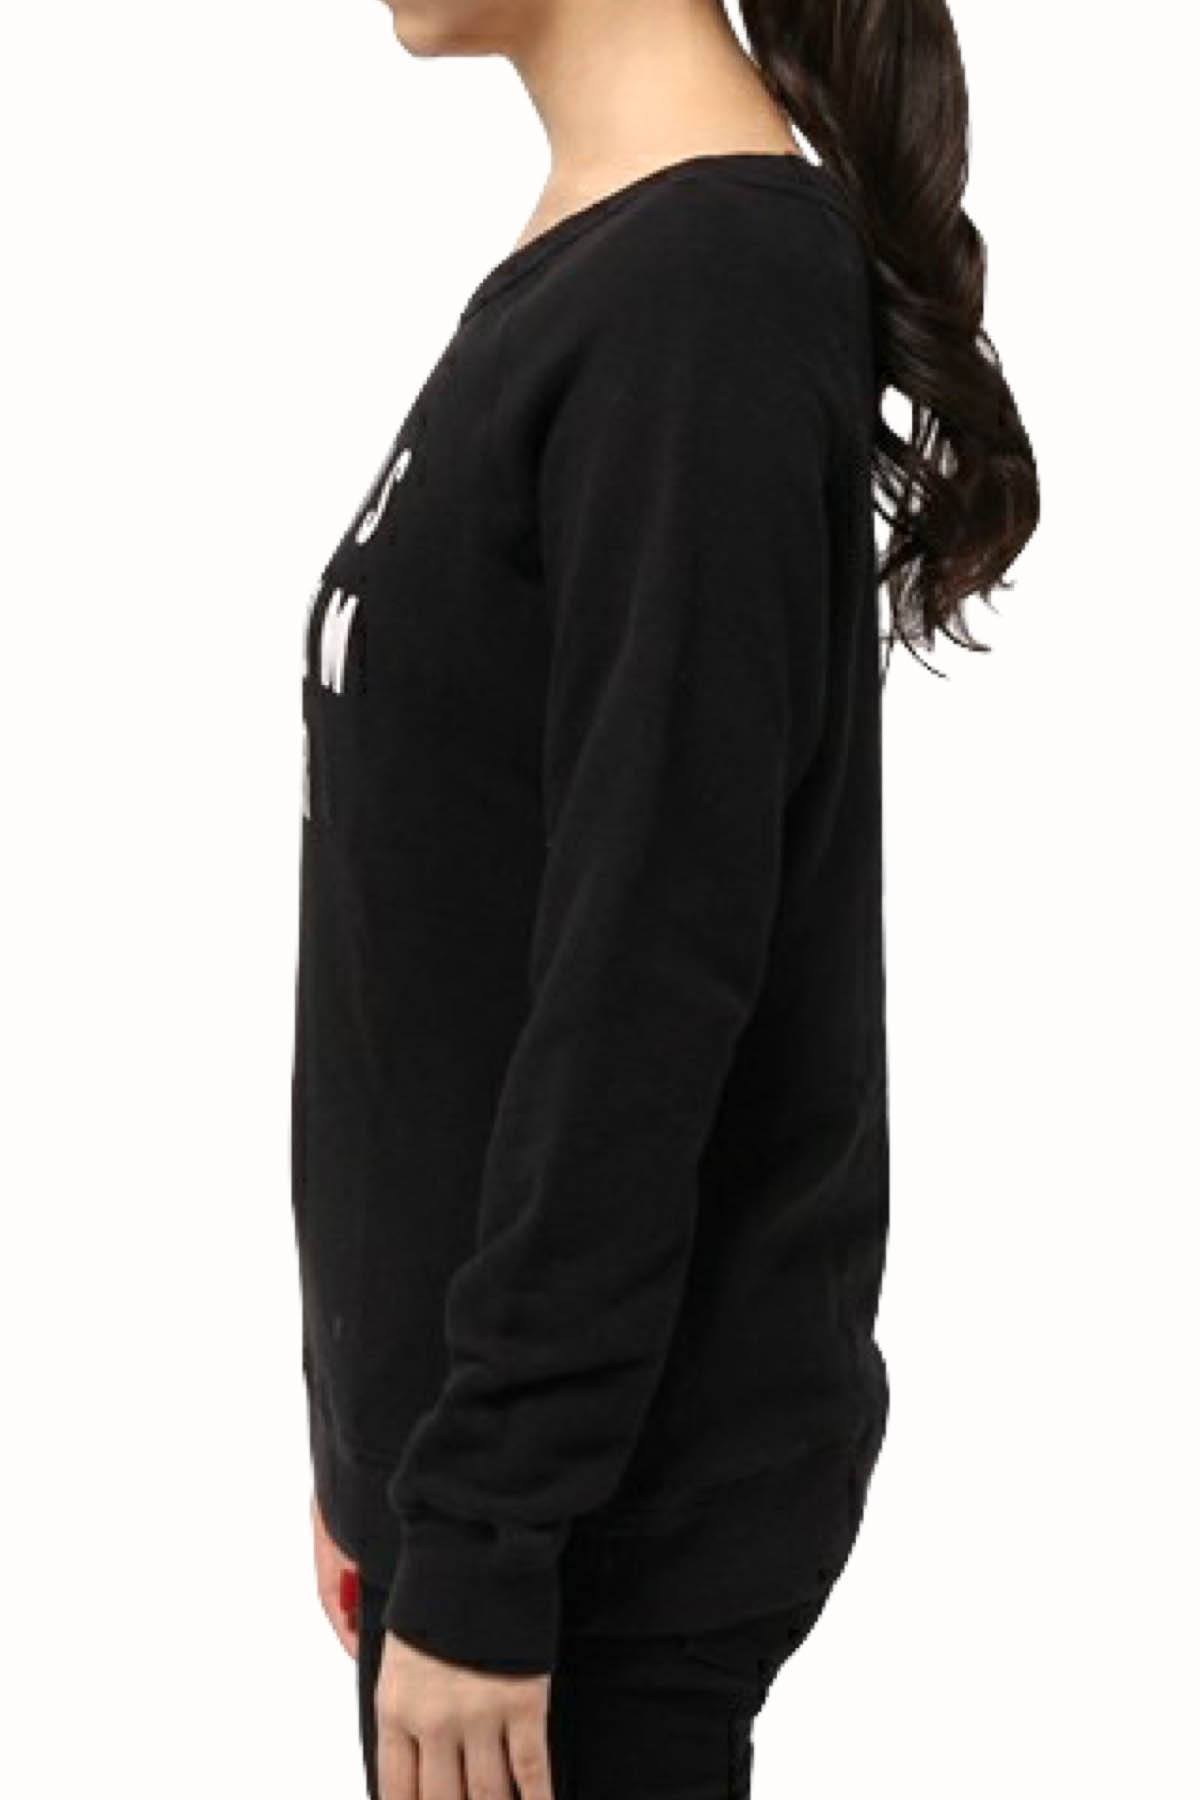 Rxmance Unisex Black 'Ski Bum' Sweatshirt